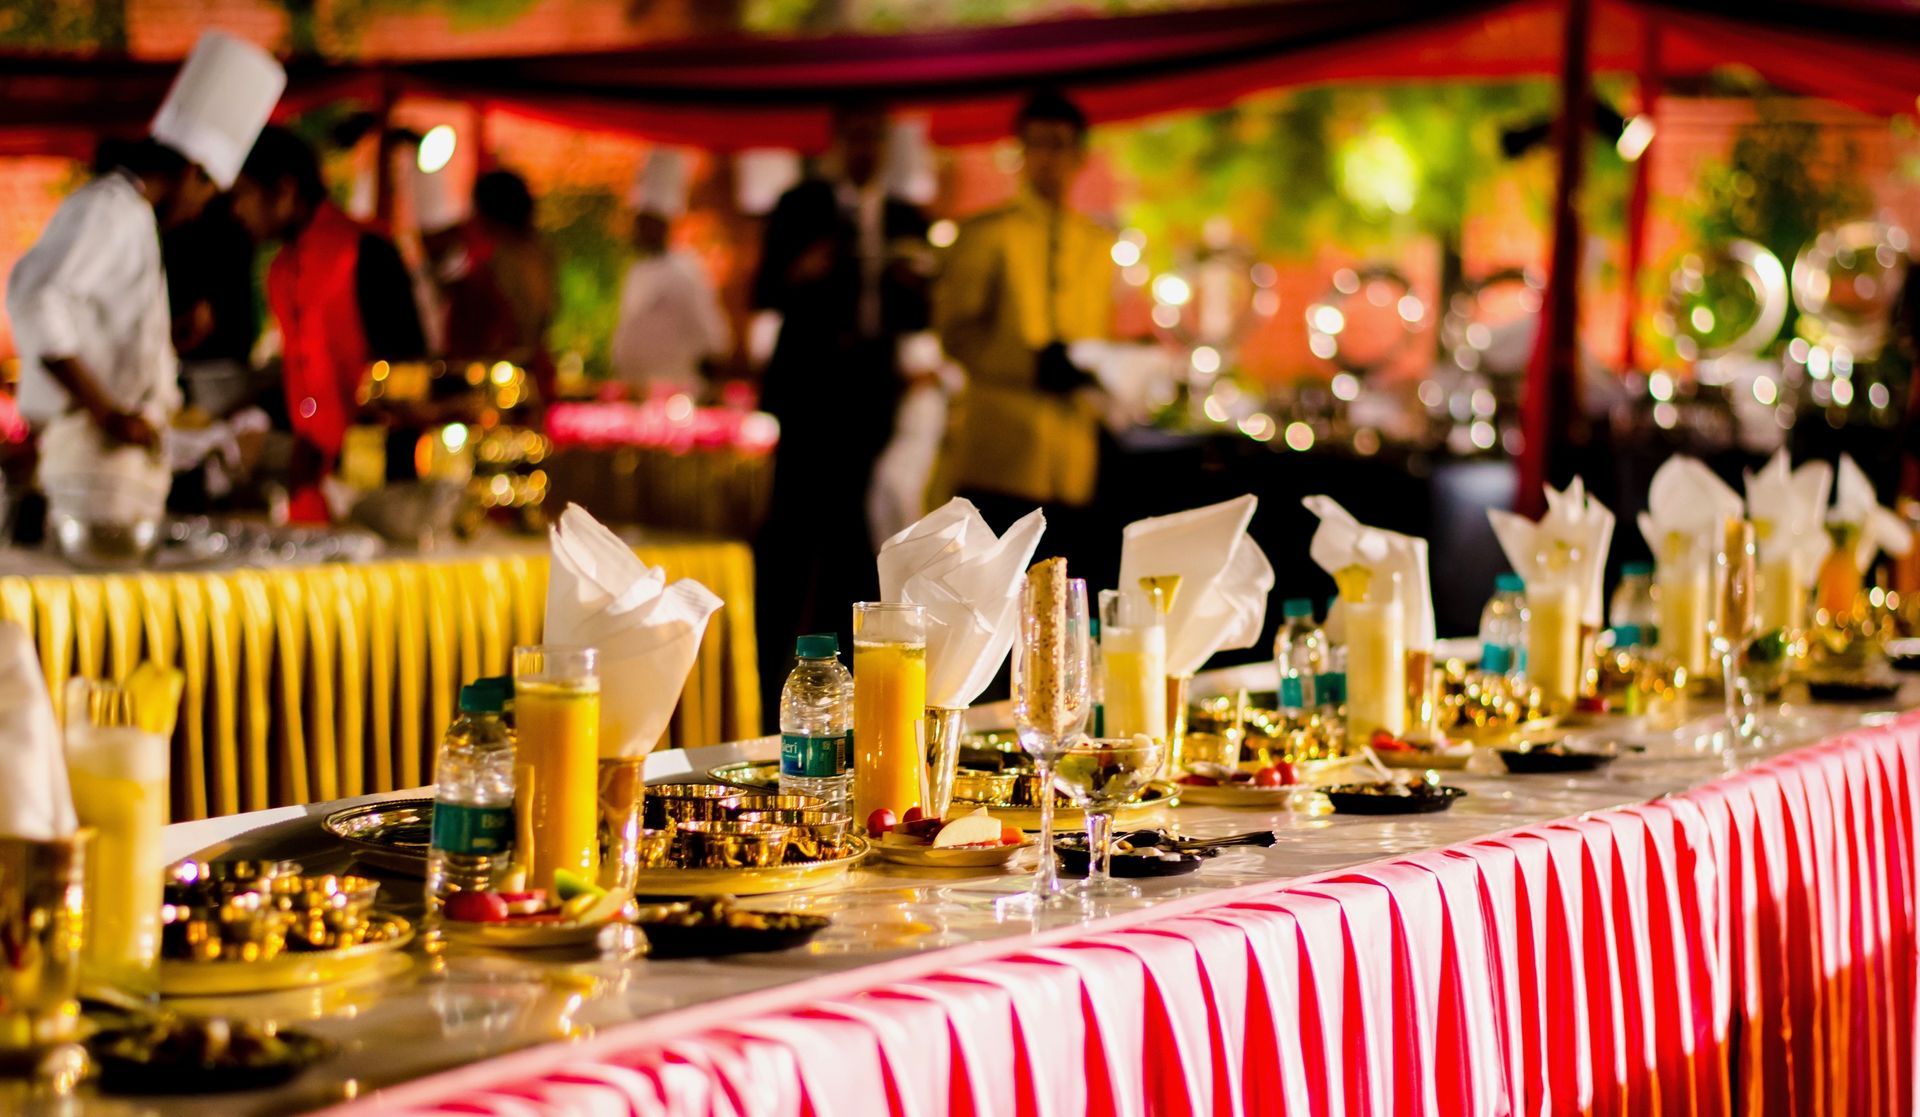 Hindu wedding table and food spreads